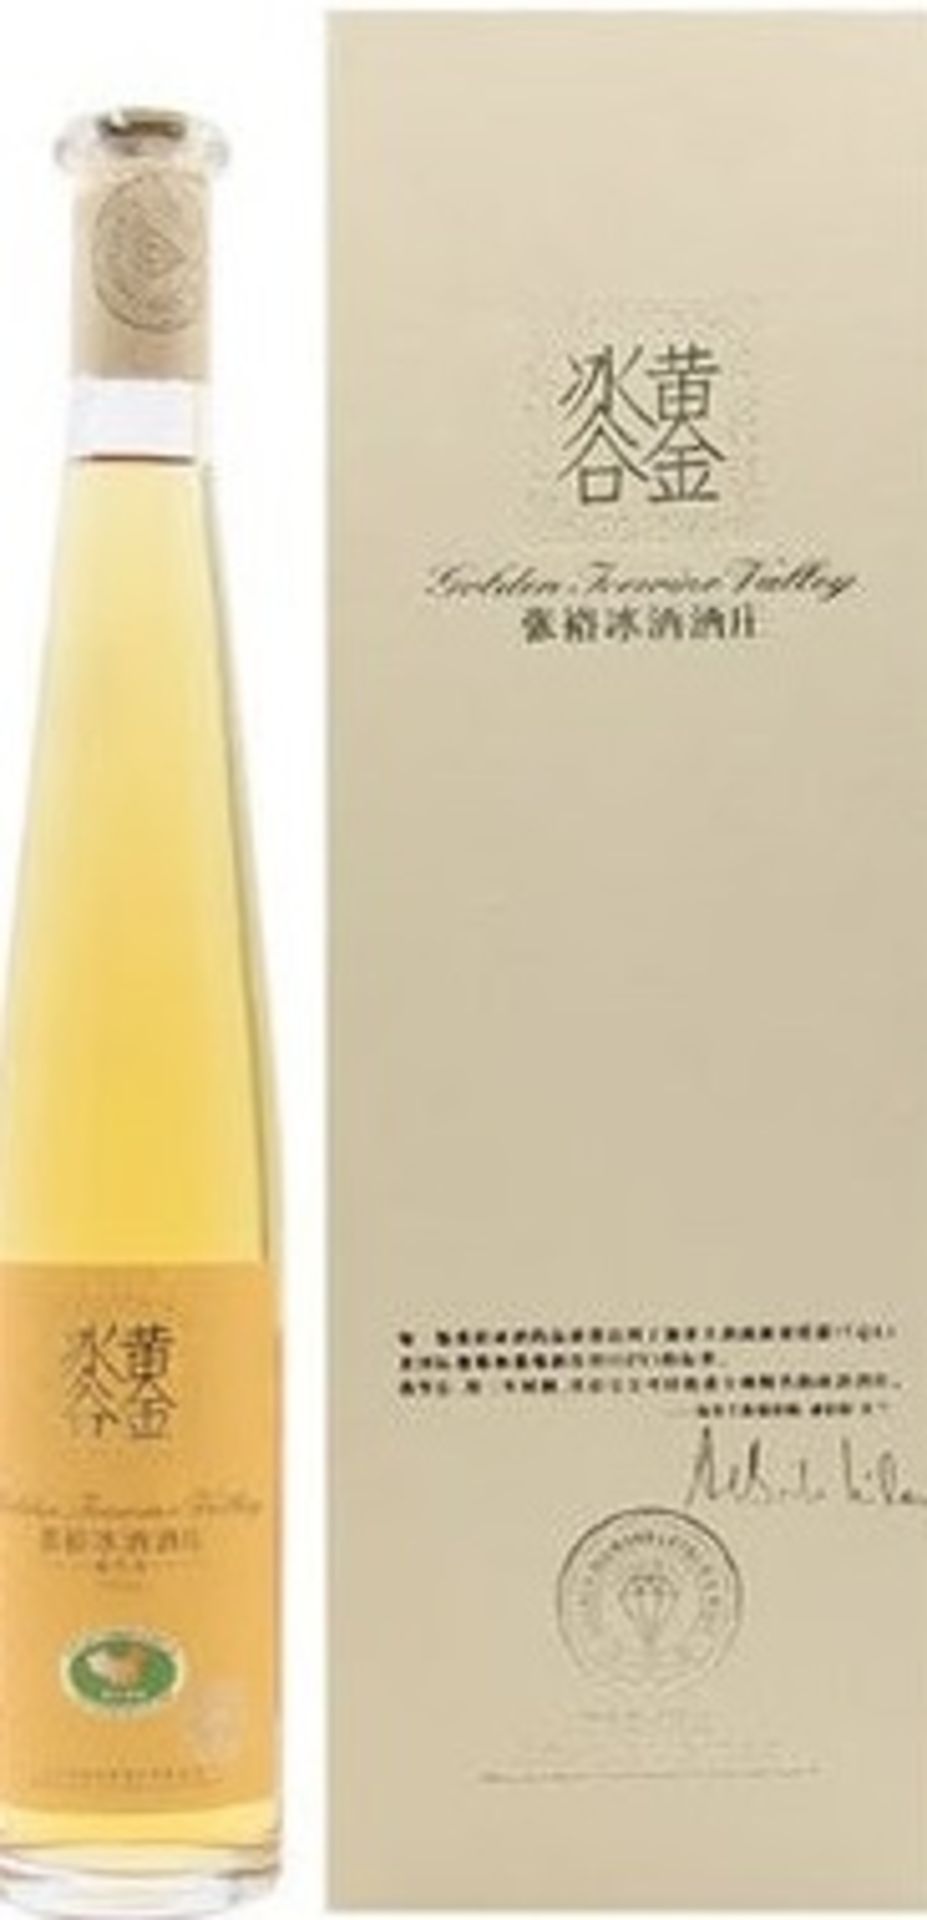 Changyu Golden Diamond Vidal Icewine 375ml ( Bid Is For 1x Bottle Option To Purchase More) - Image 2 of 2